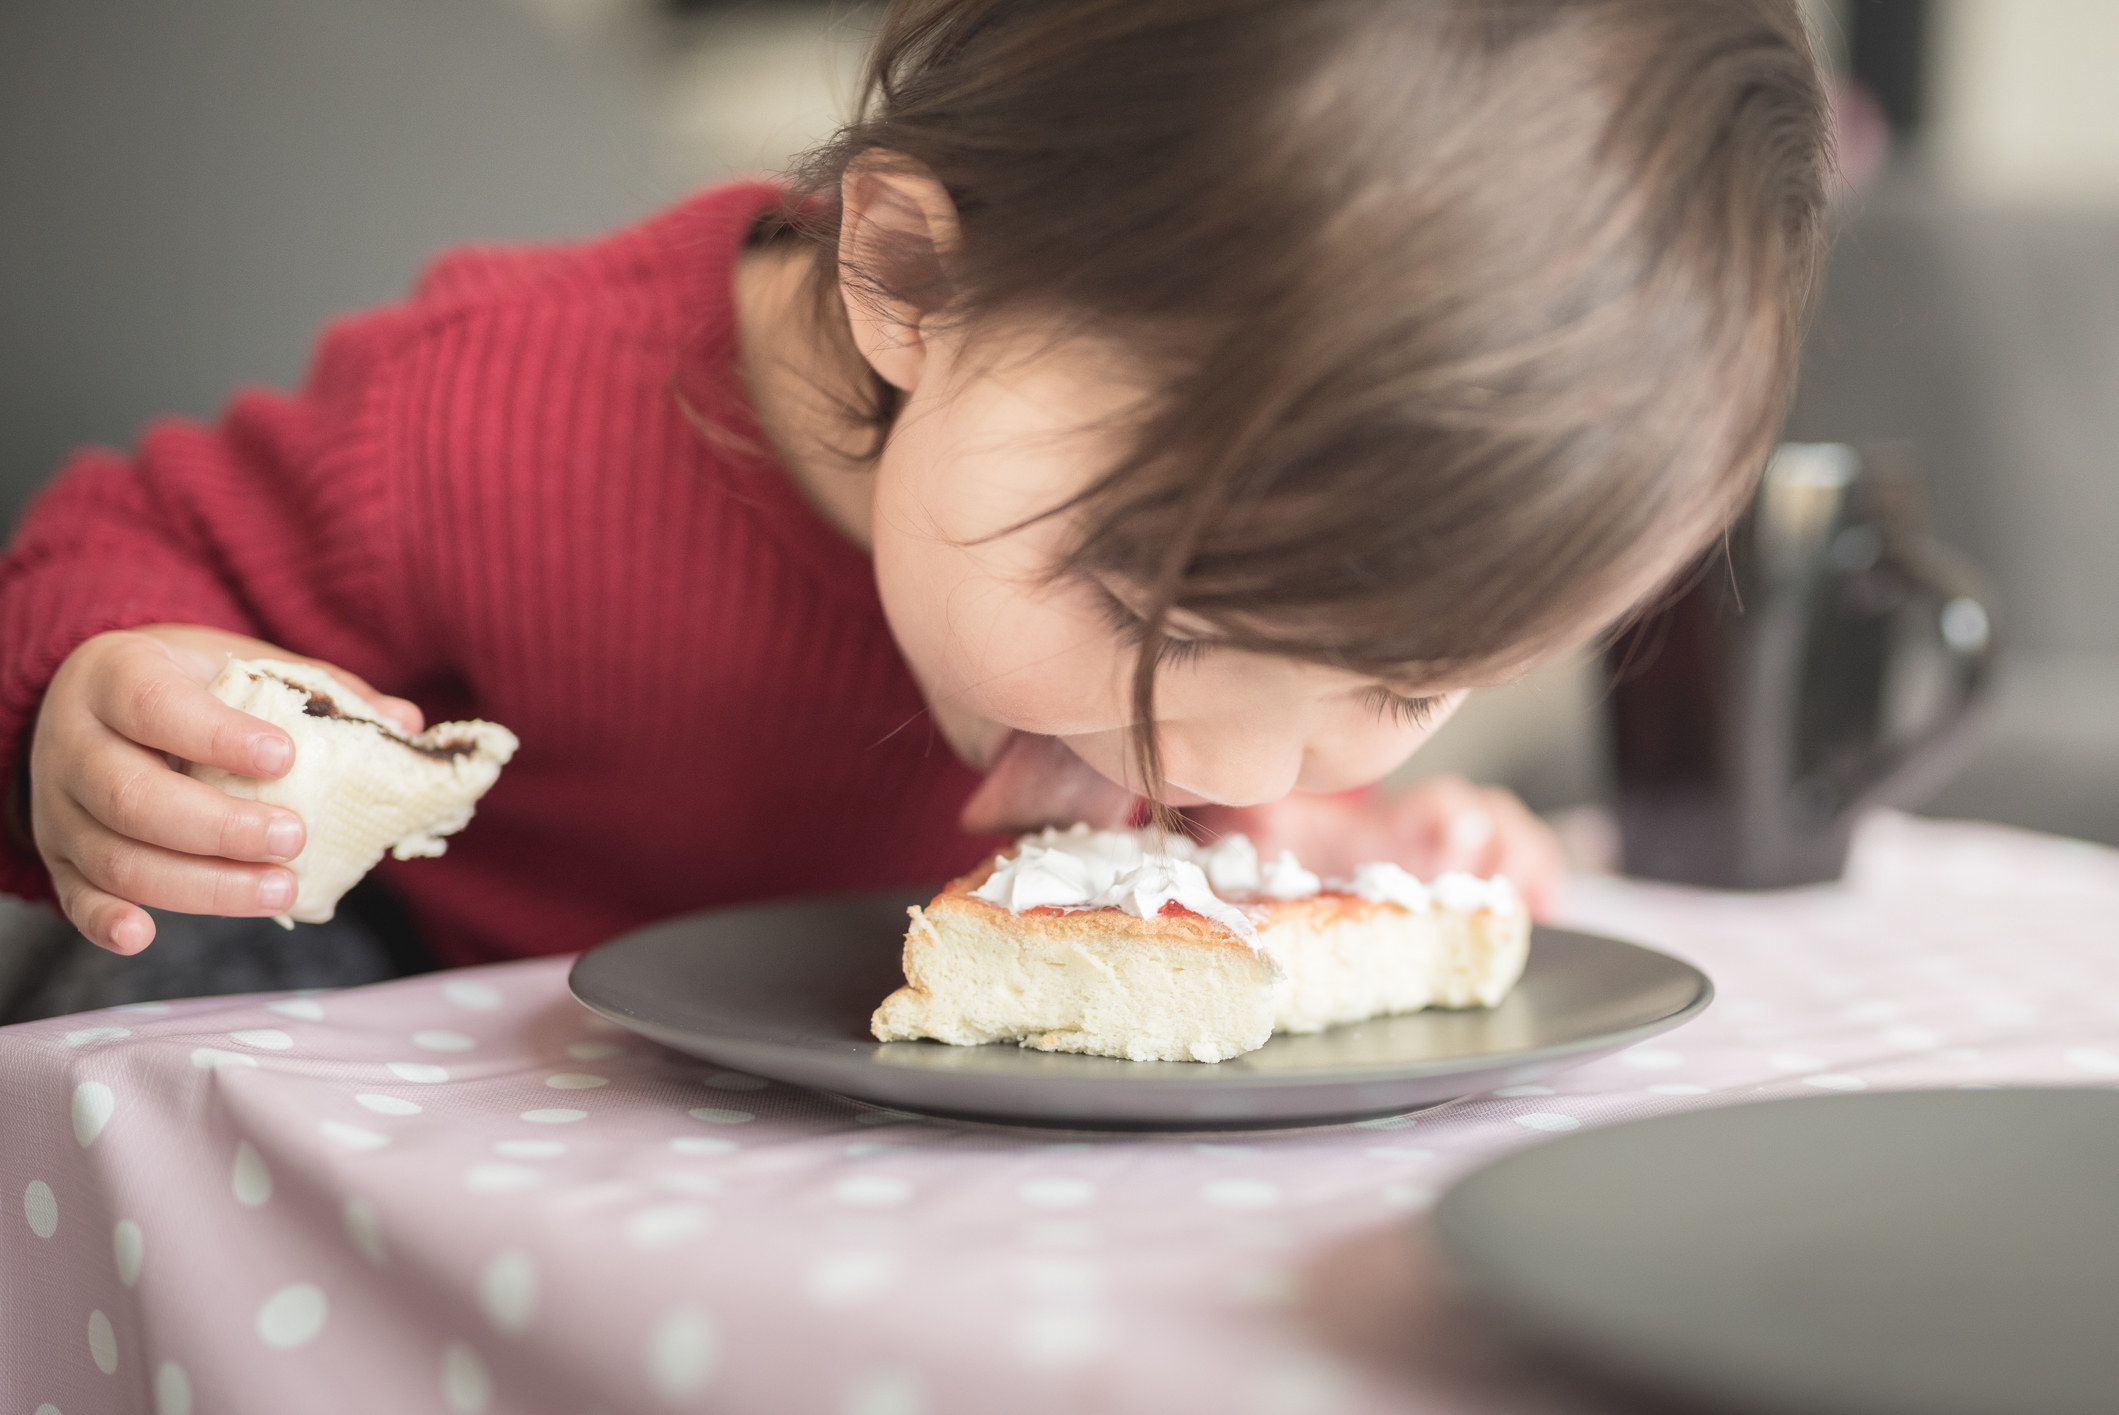 A toddler licking dessert on a plate.